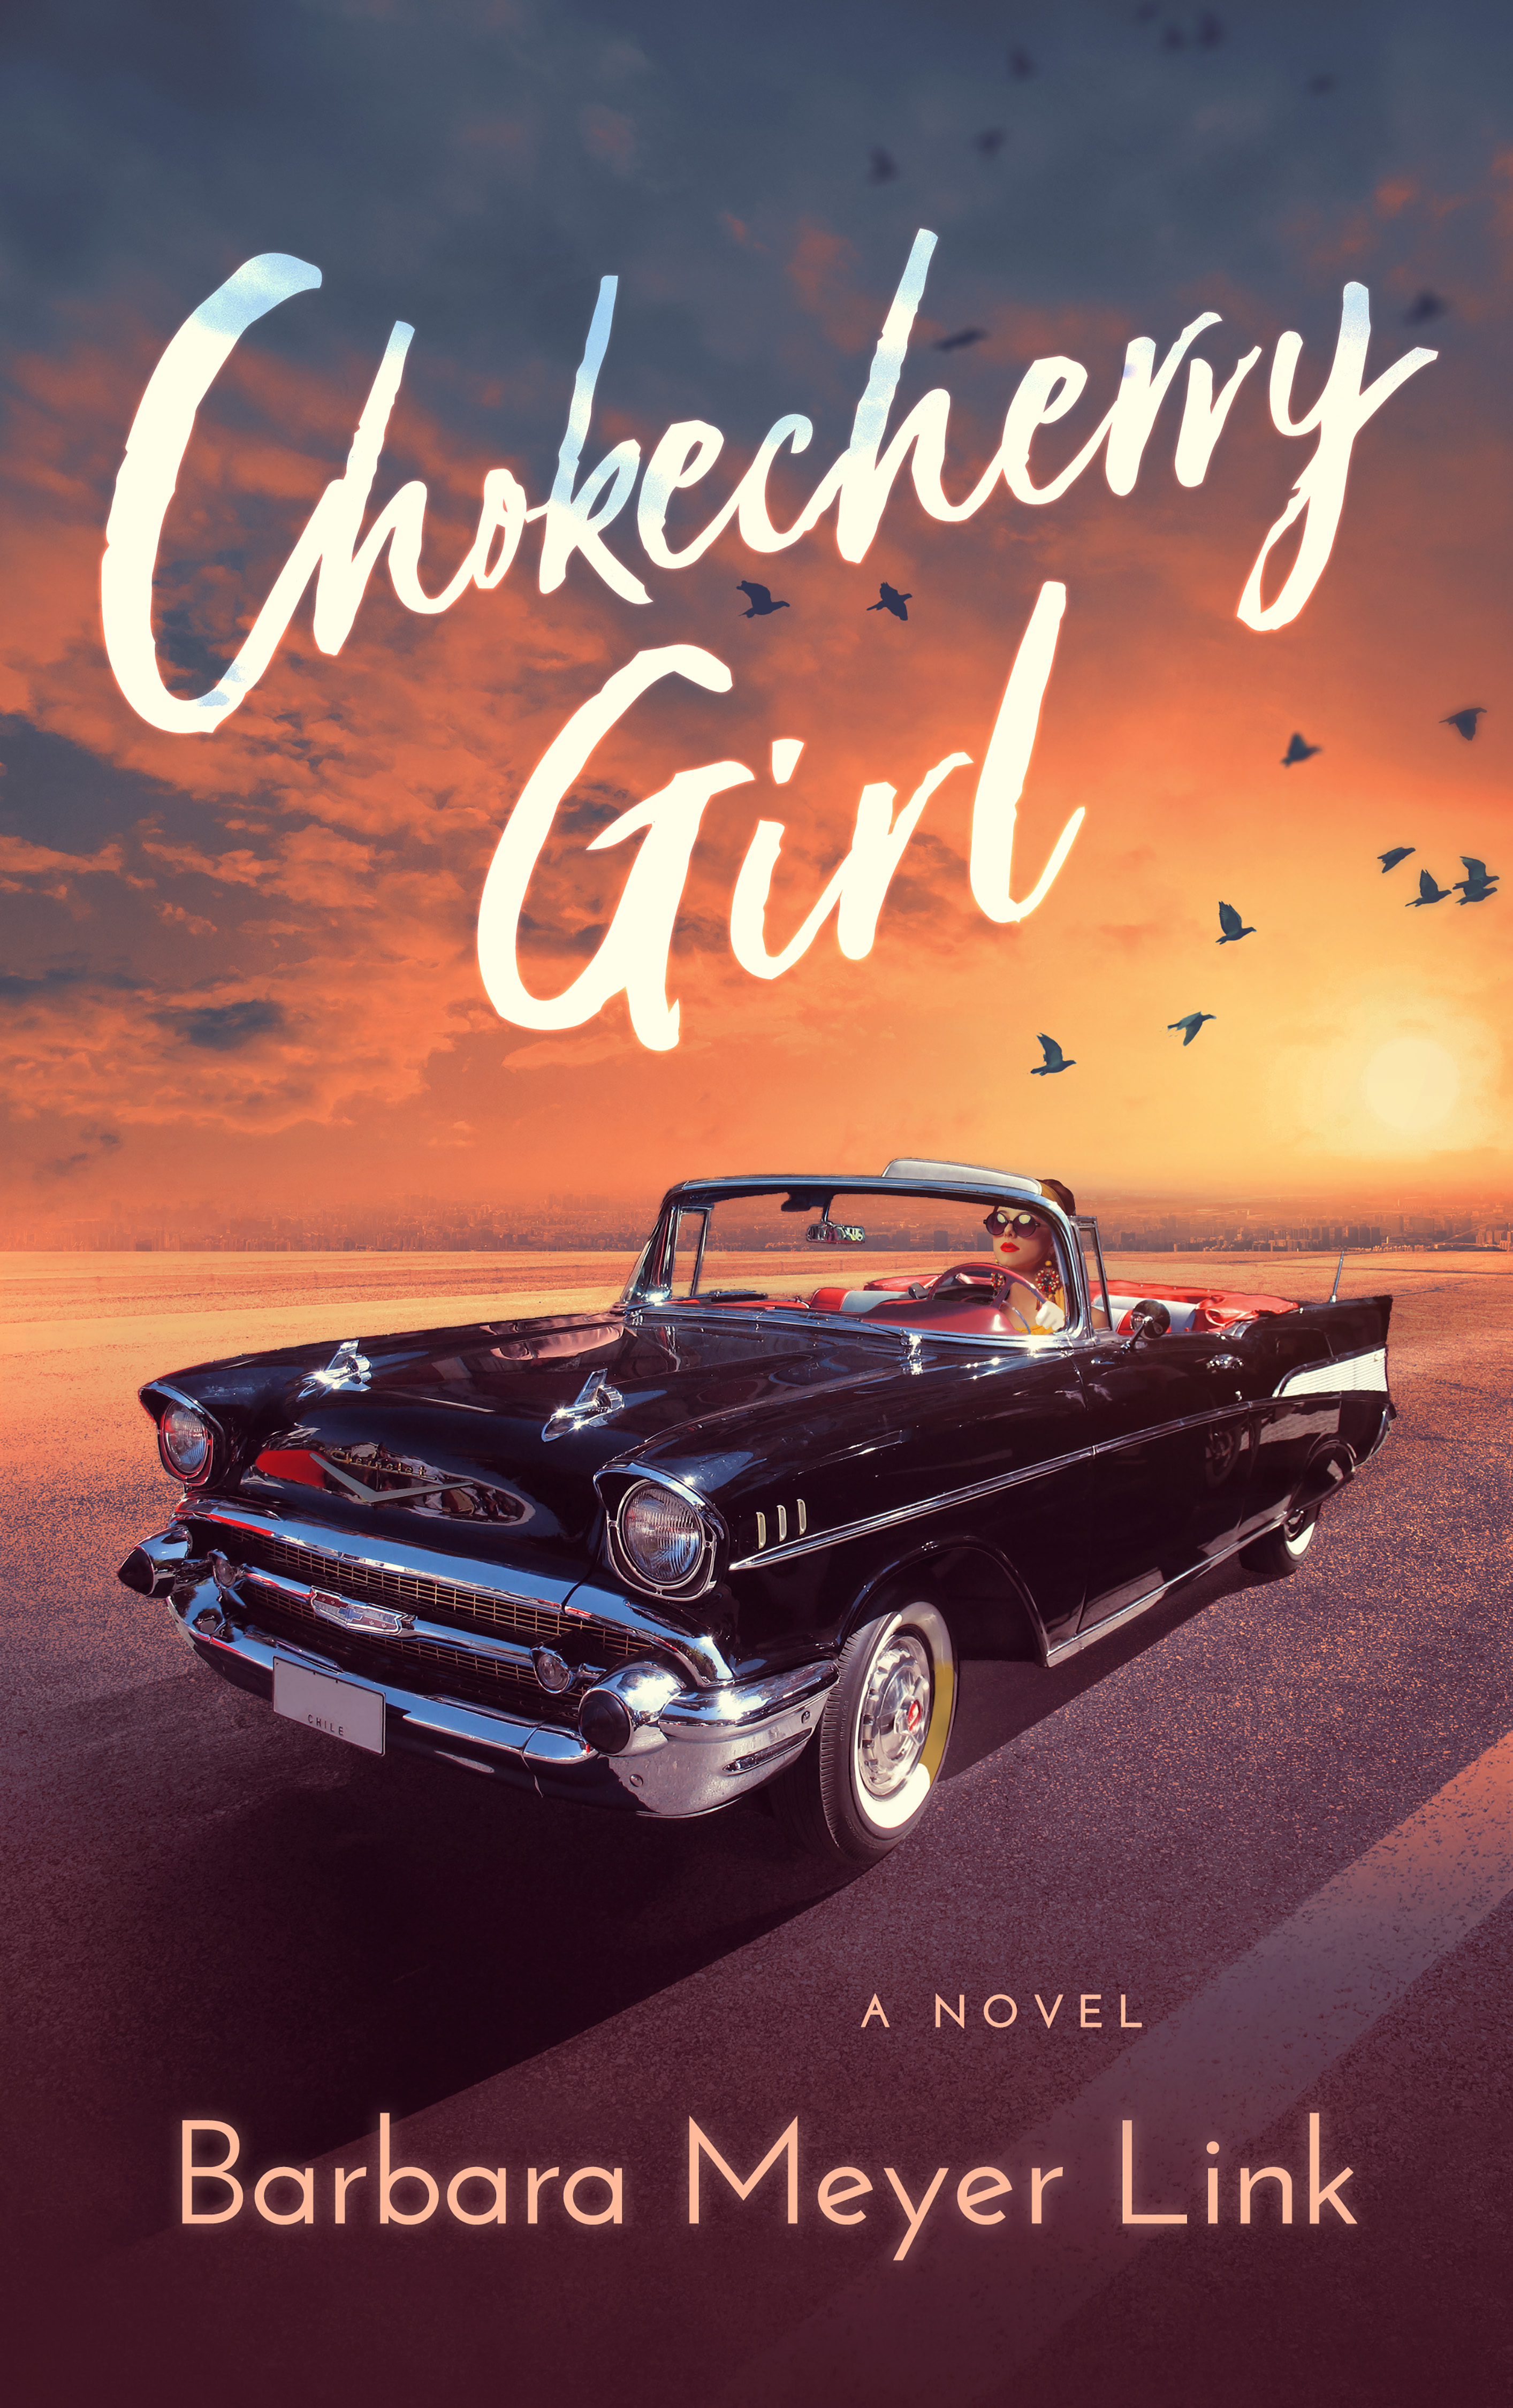 Chokecherry Girl cover